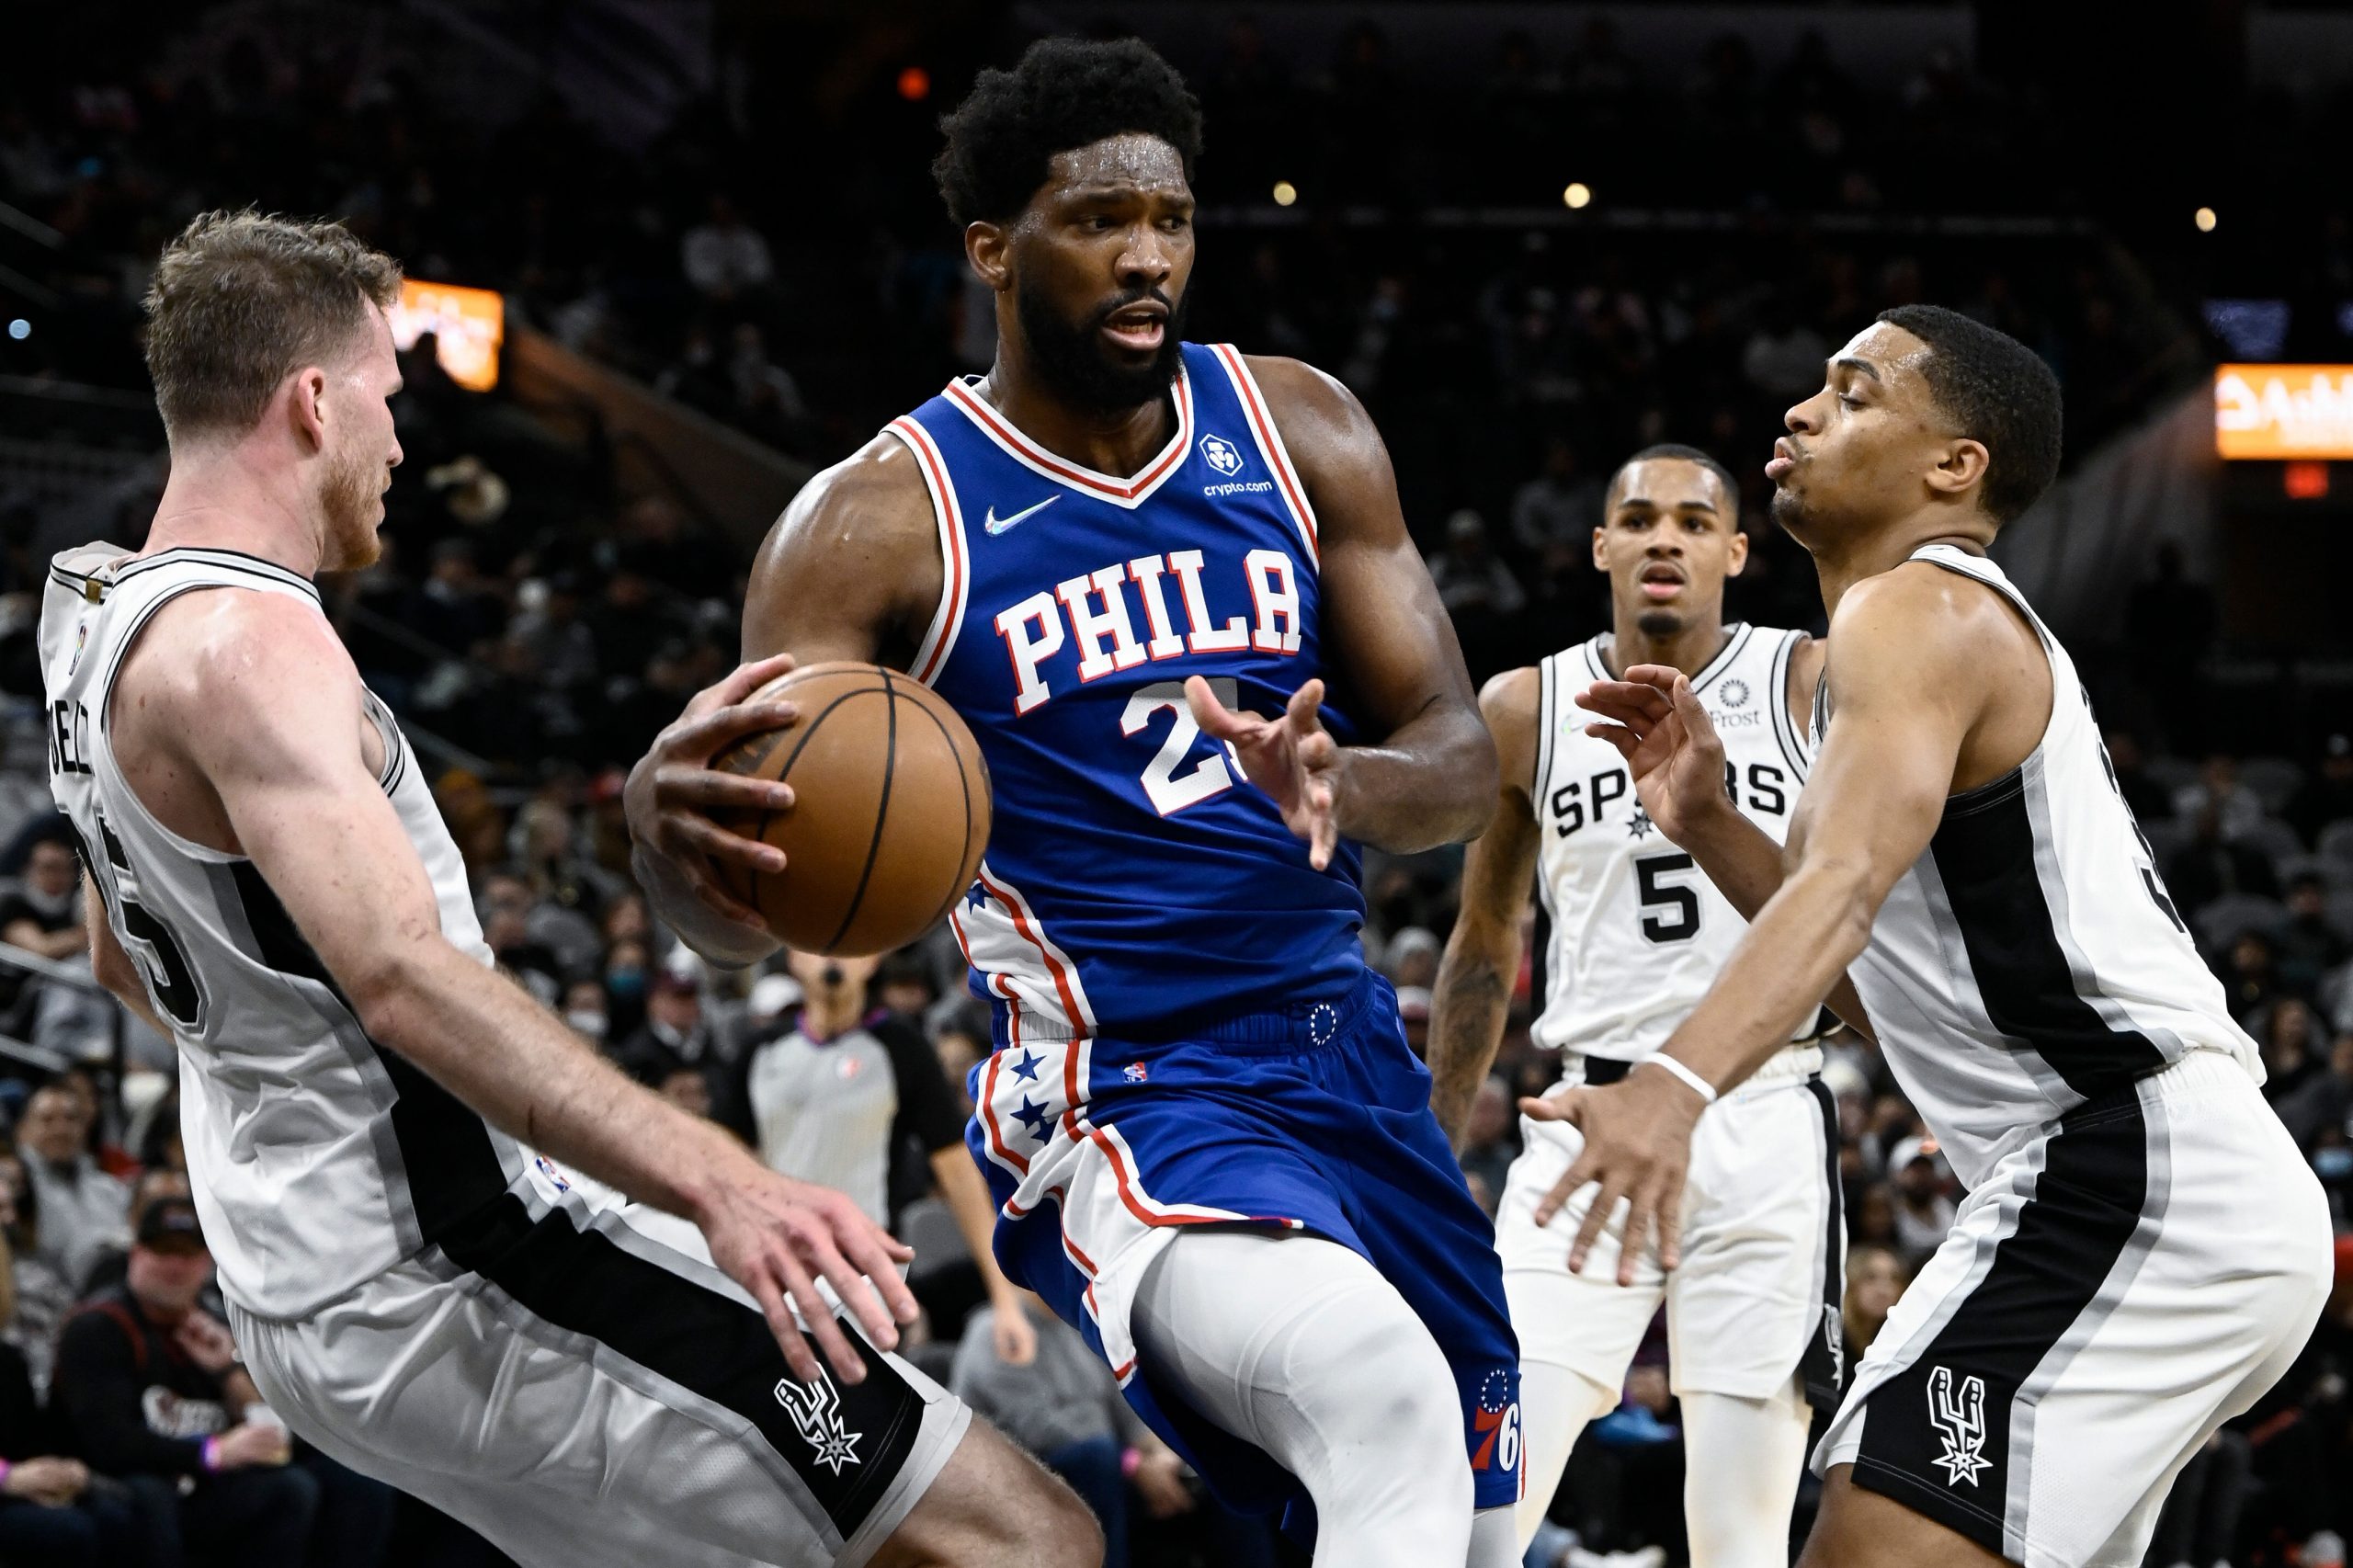 NBA: Joel Embiid’s double-double helps Philadelphia 76ers hold off Antonio Spurs, 115-109